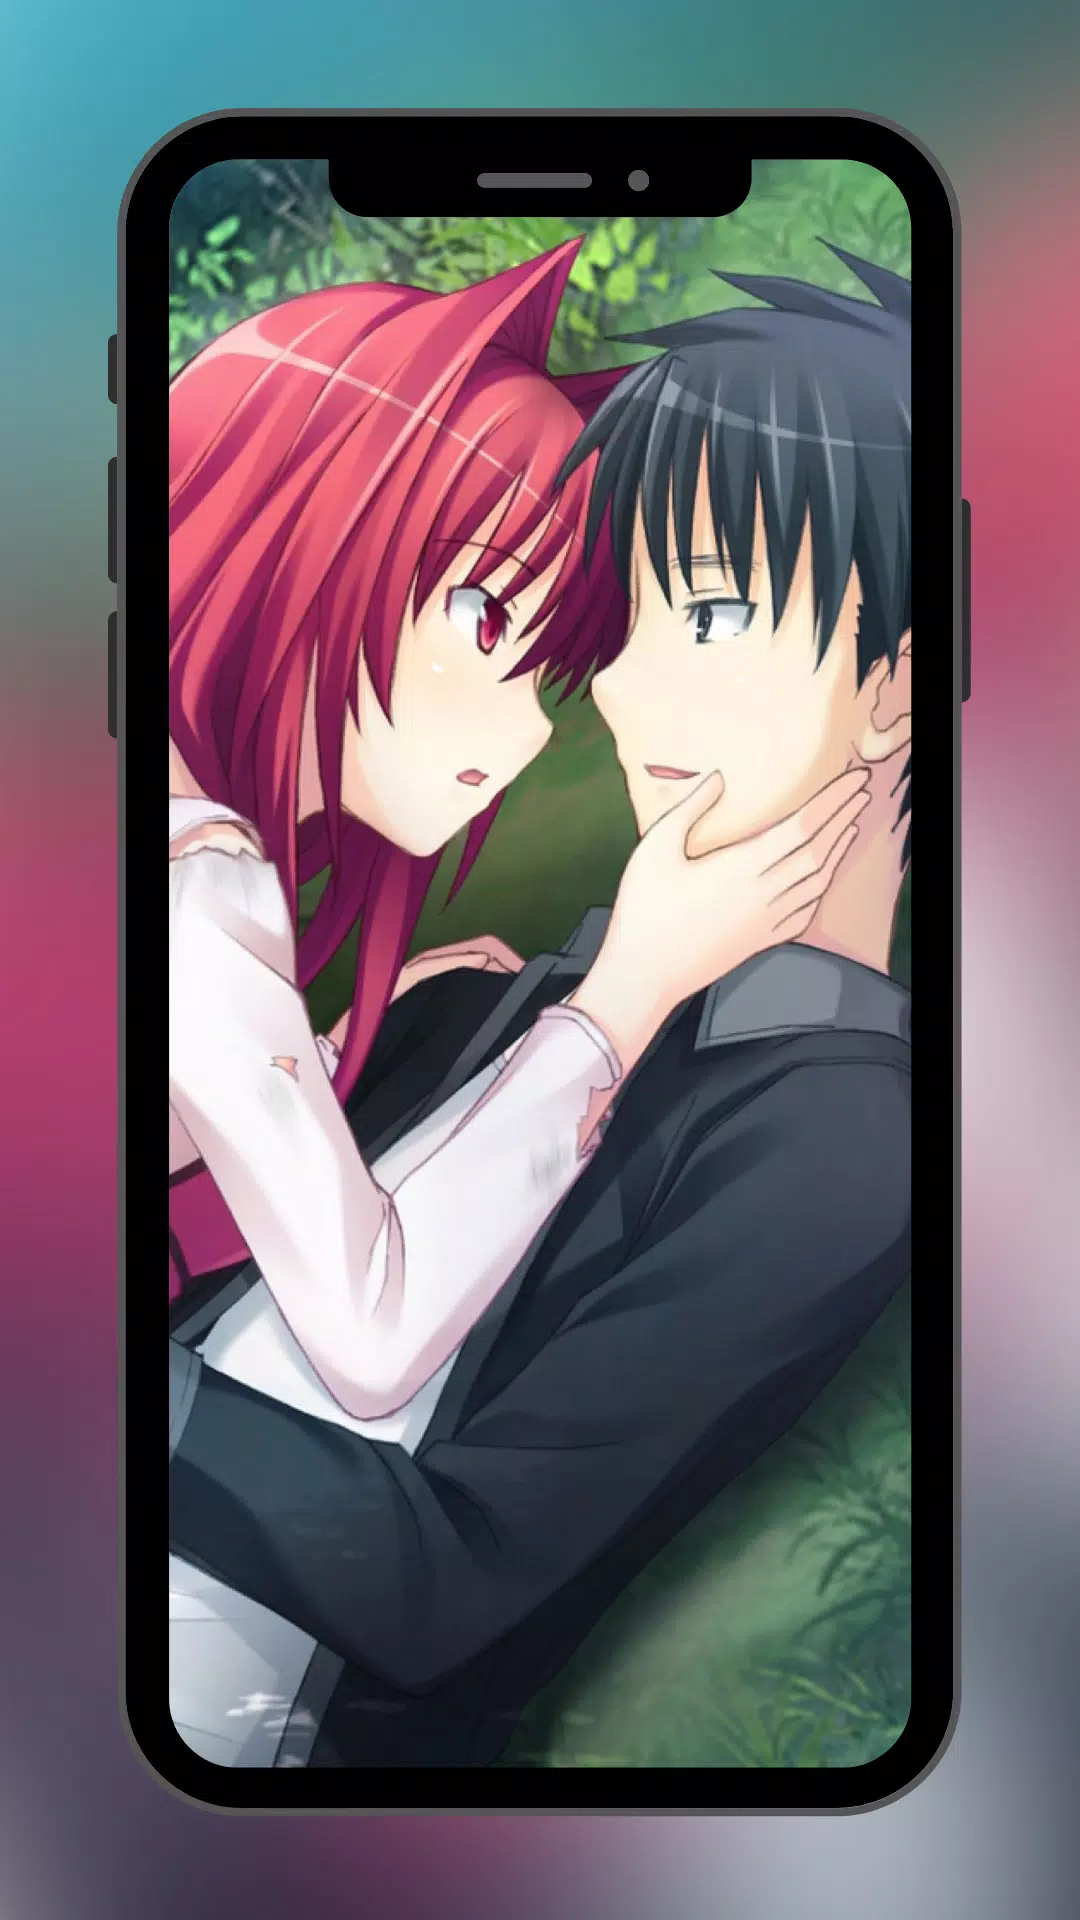 Descarga de APK de Pareja Anime Fotos De Perfil Pro Max para Android